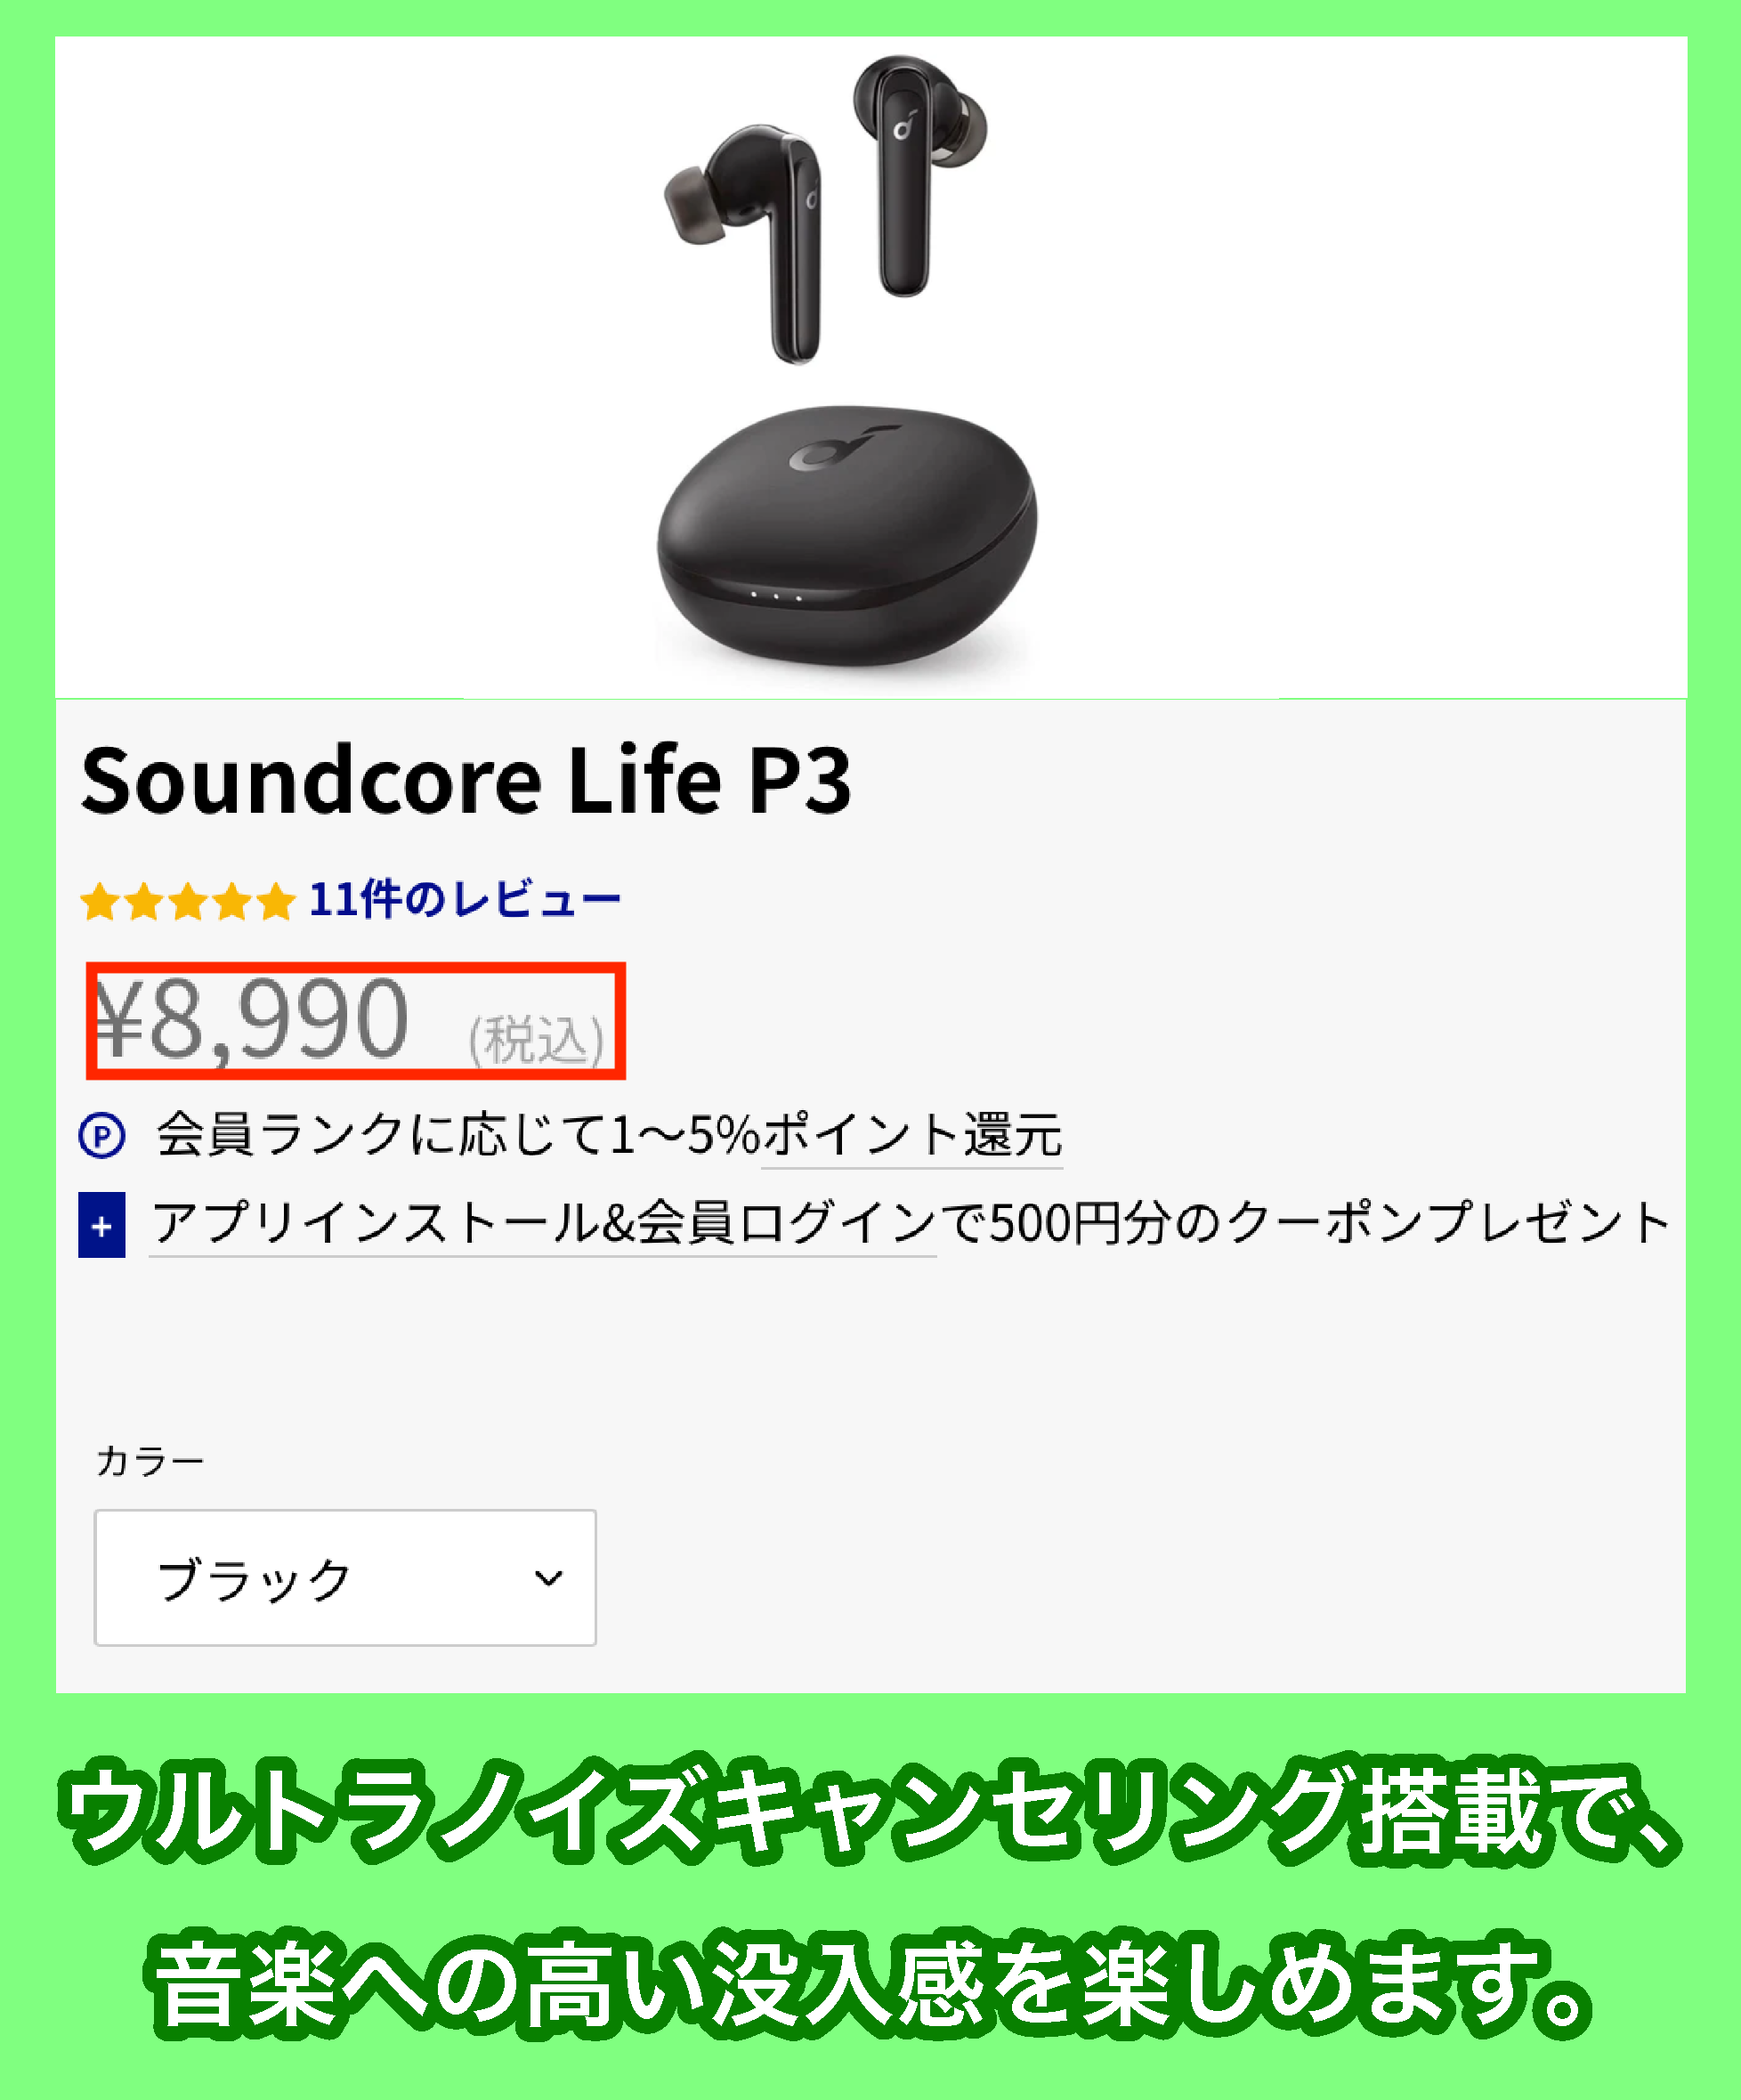 Anker Soundcore Life P3の価格